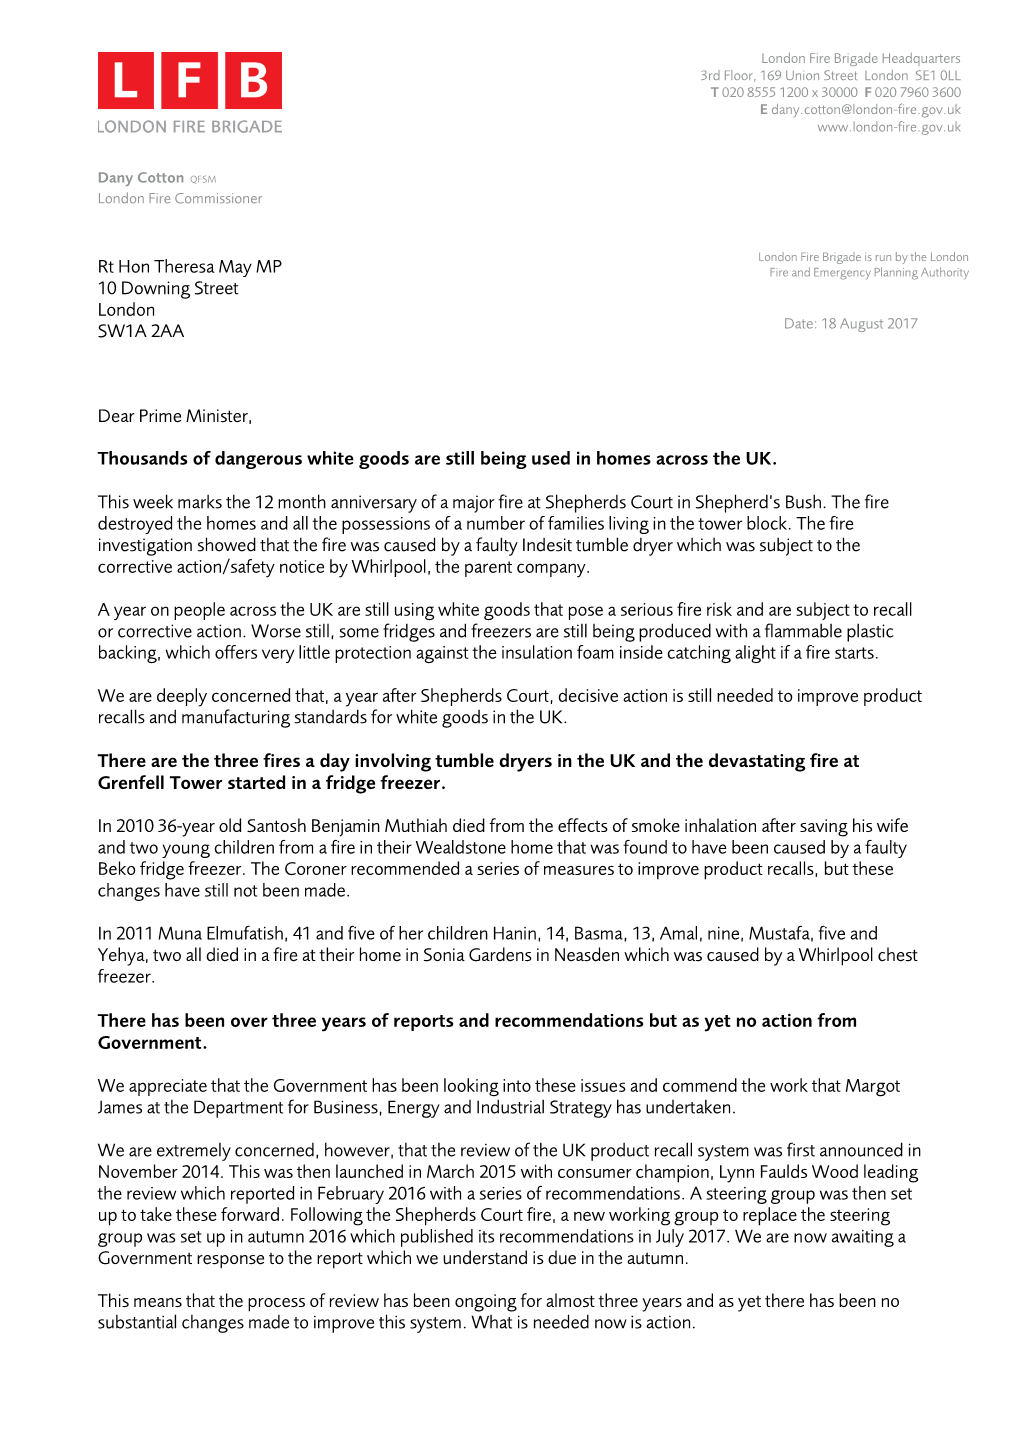 Letter to Right Honourable Theresa May MP Regarding Dangerous White